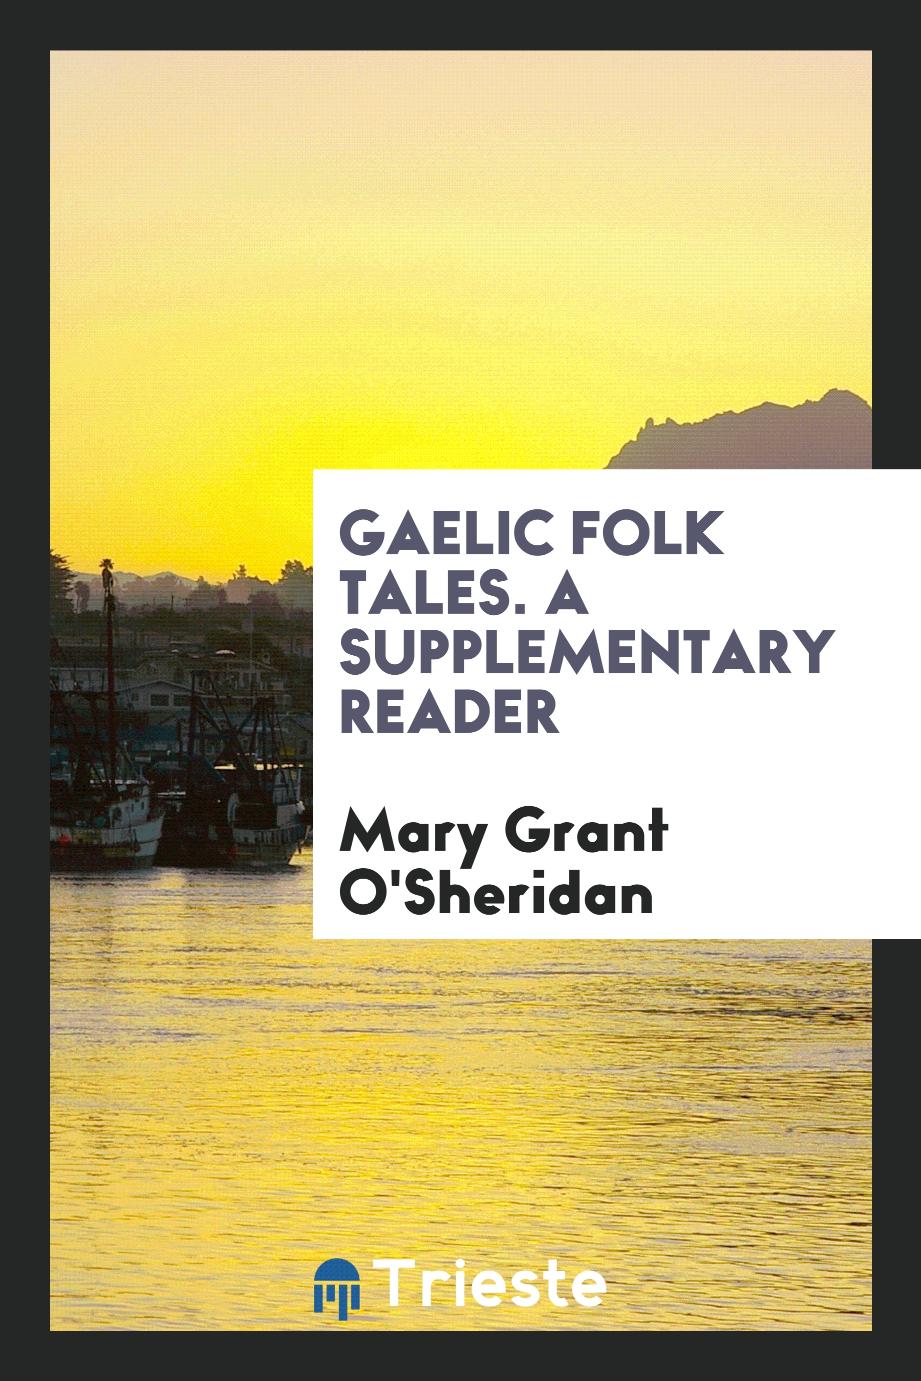 Gaelic folk tales. A supplementary reader